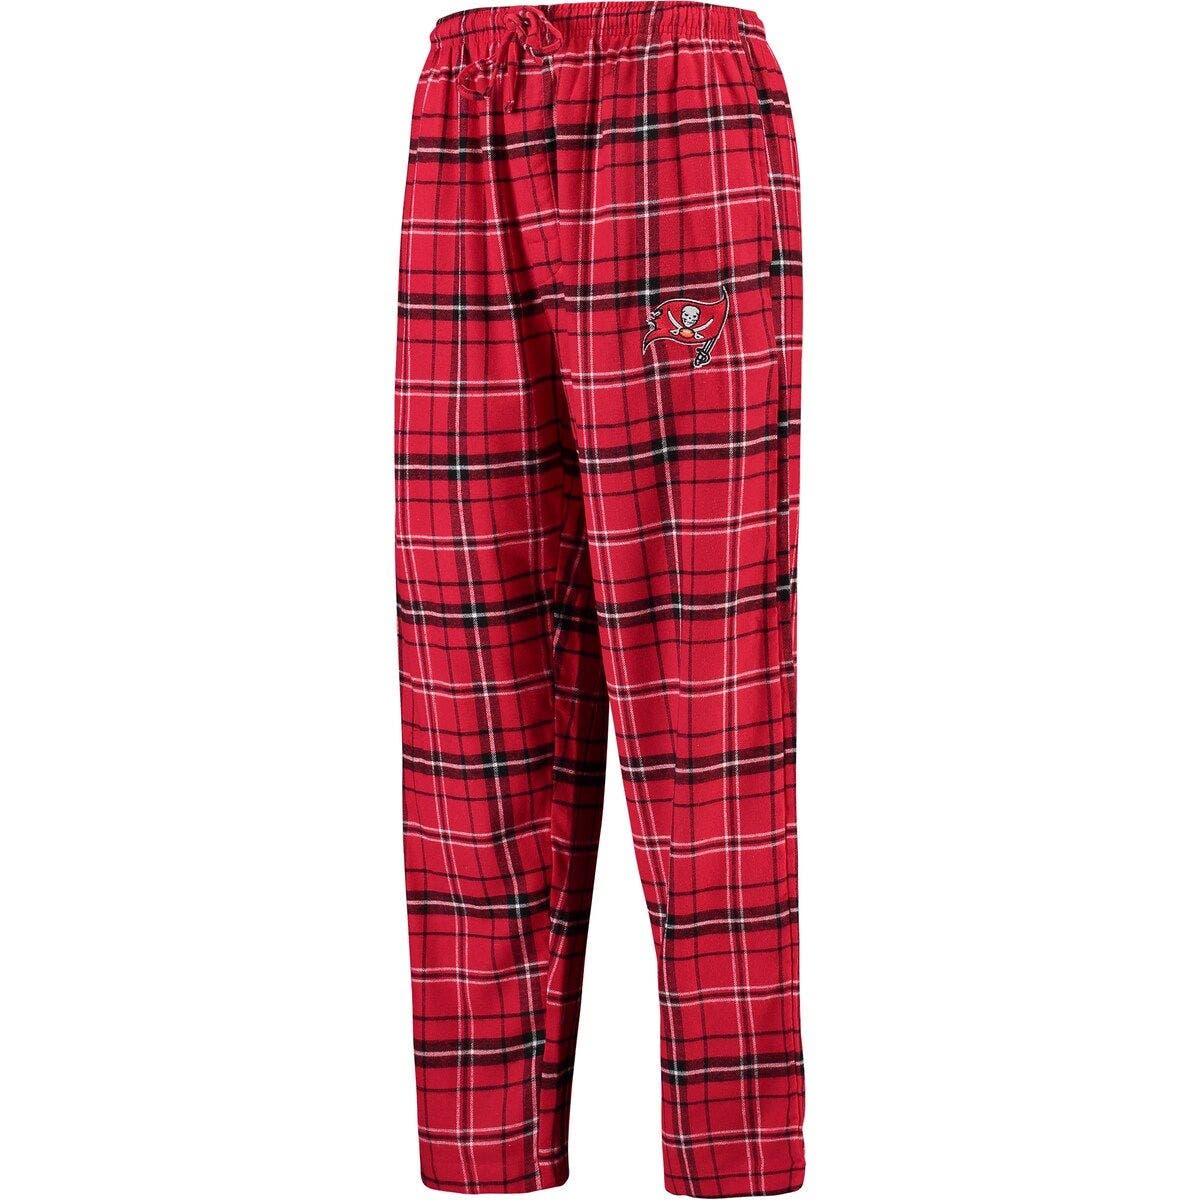 Concepts Sport Chicago Bulls Mens Pajama Pants Plaid Pajama Bottoms 